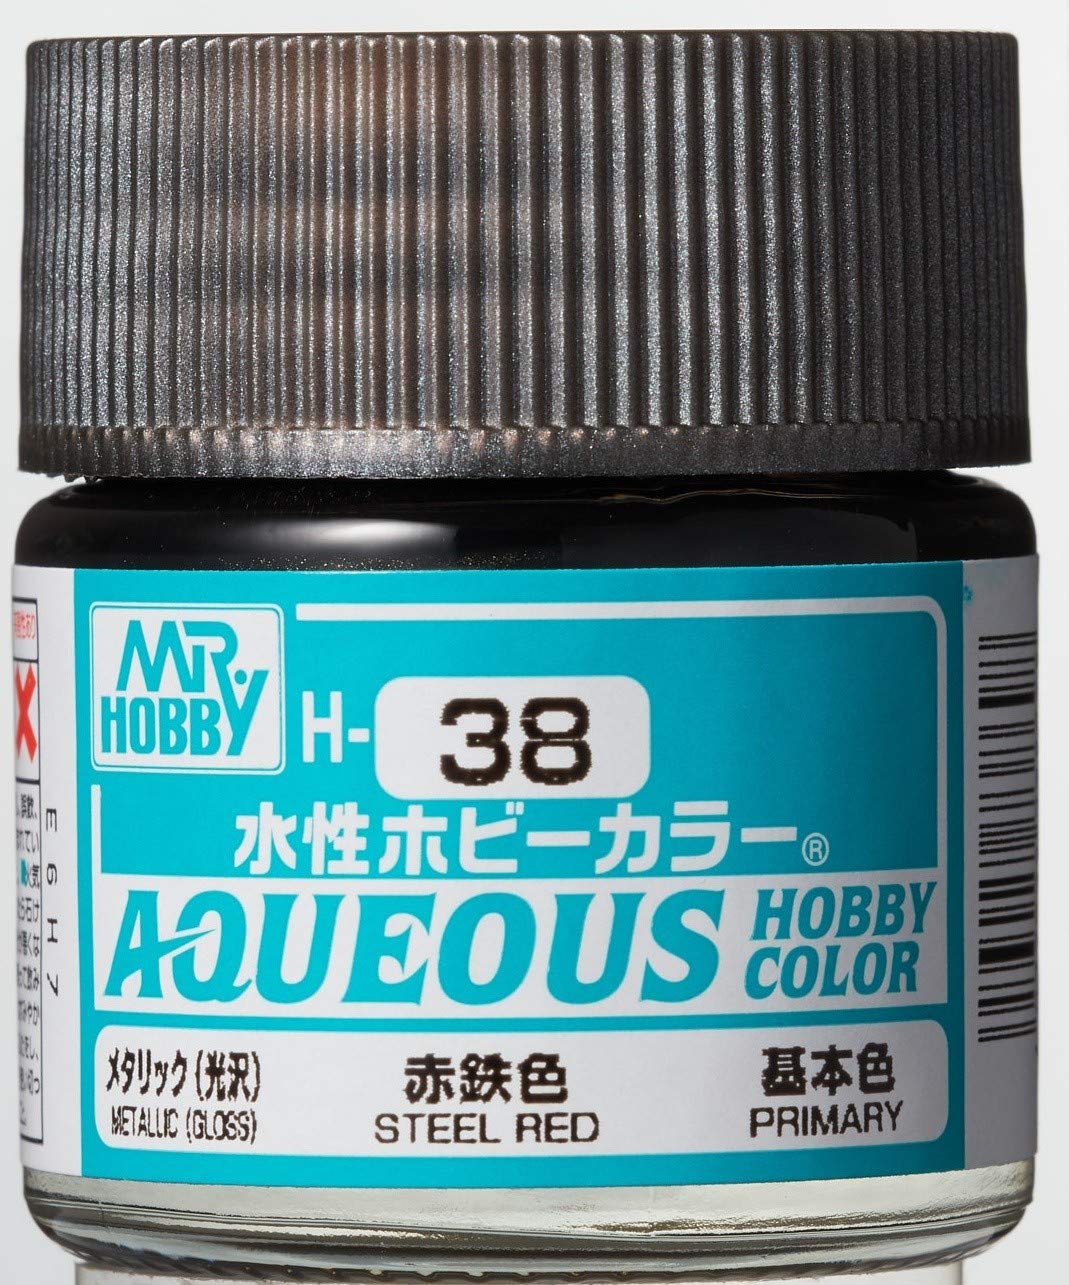 Mr. Hobby Aqueous Hobby Color H38 Metallic (Gloss) Steel Red 10ml Bottle